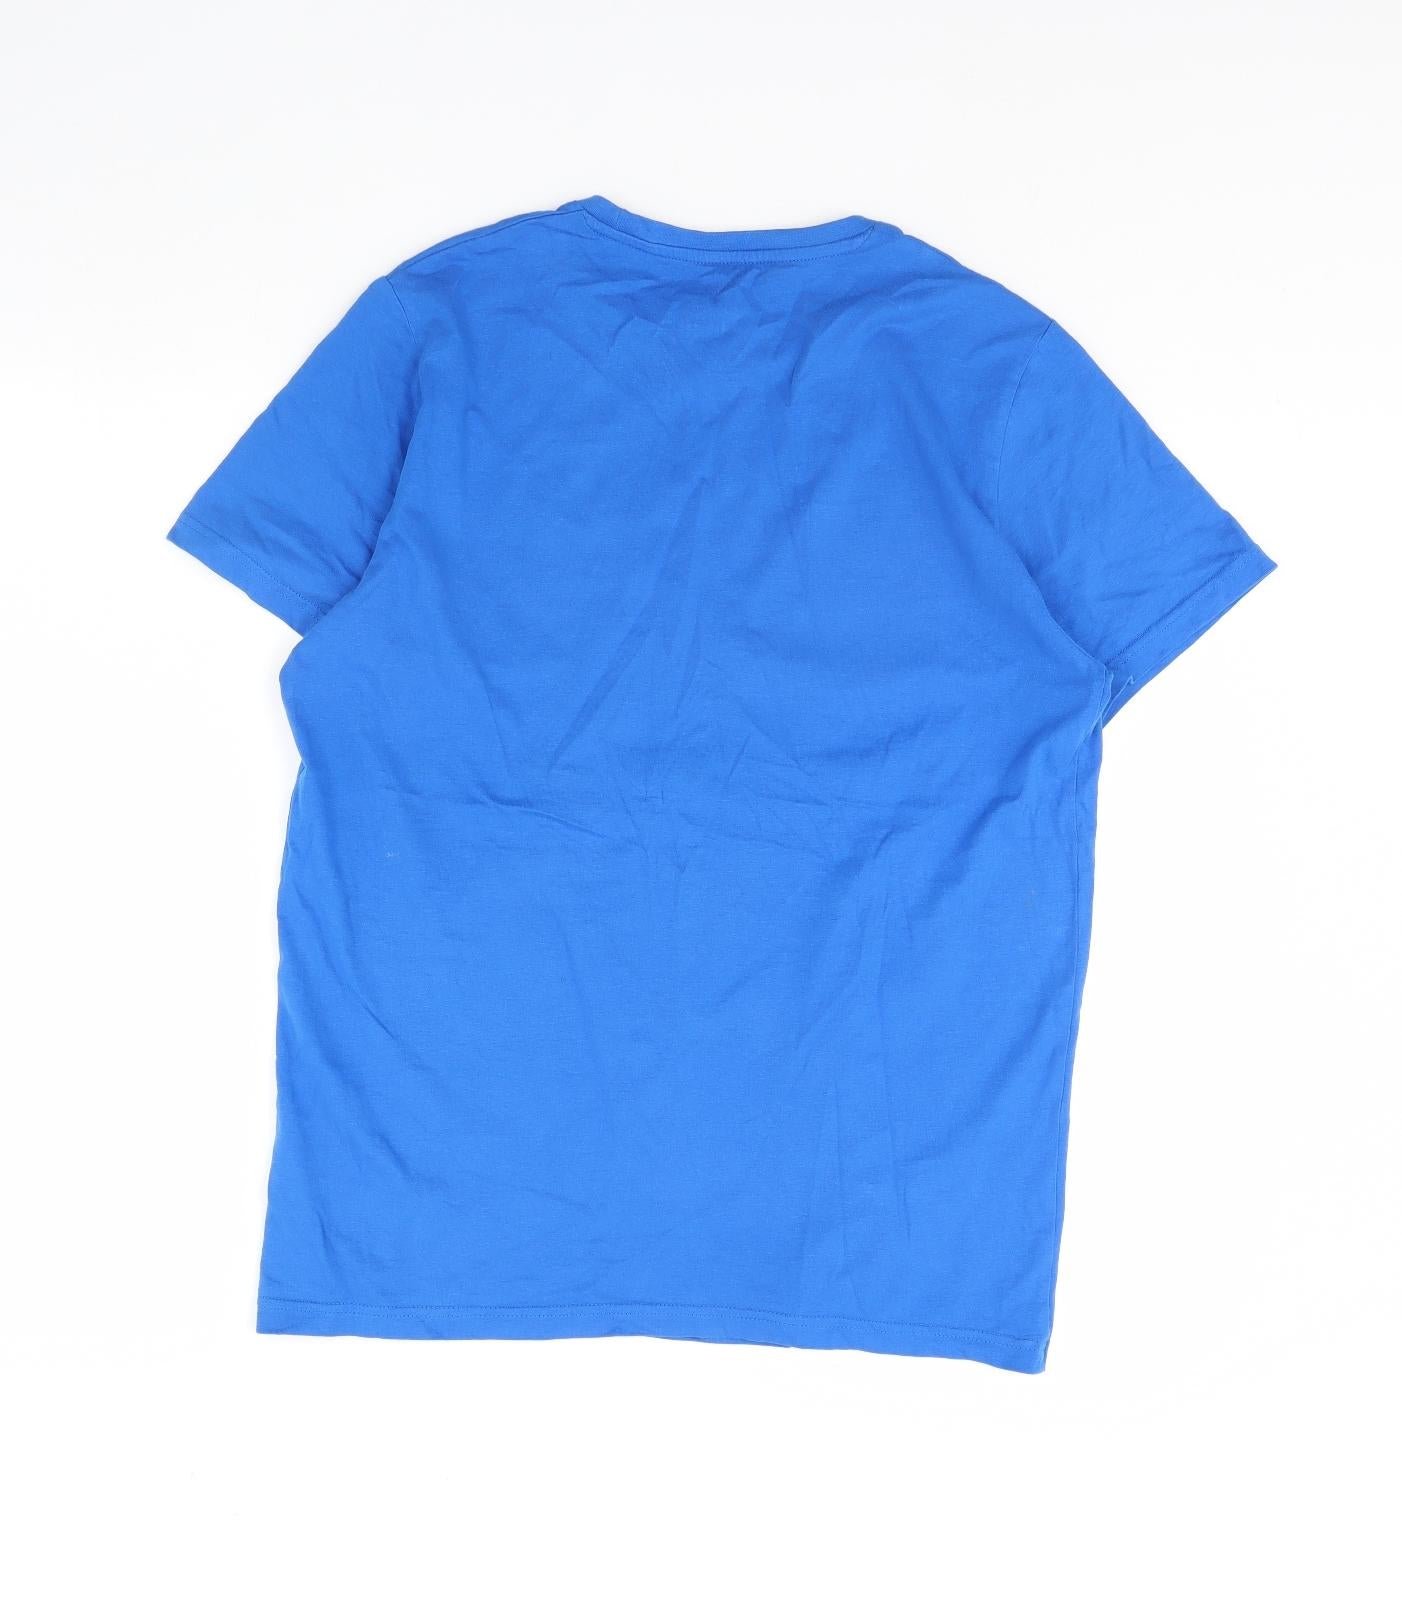 Preworn Mens Blue    T-Shirt Size M  - Forest gump